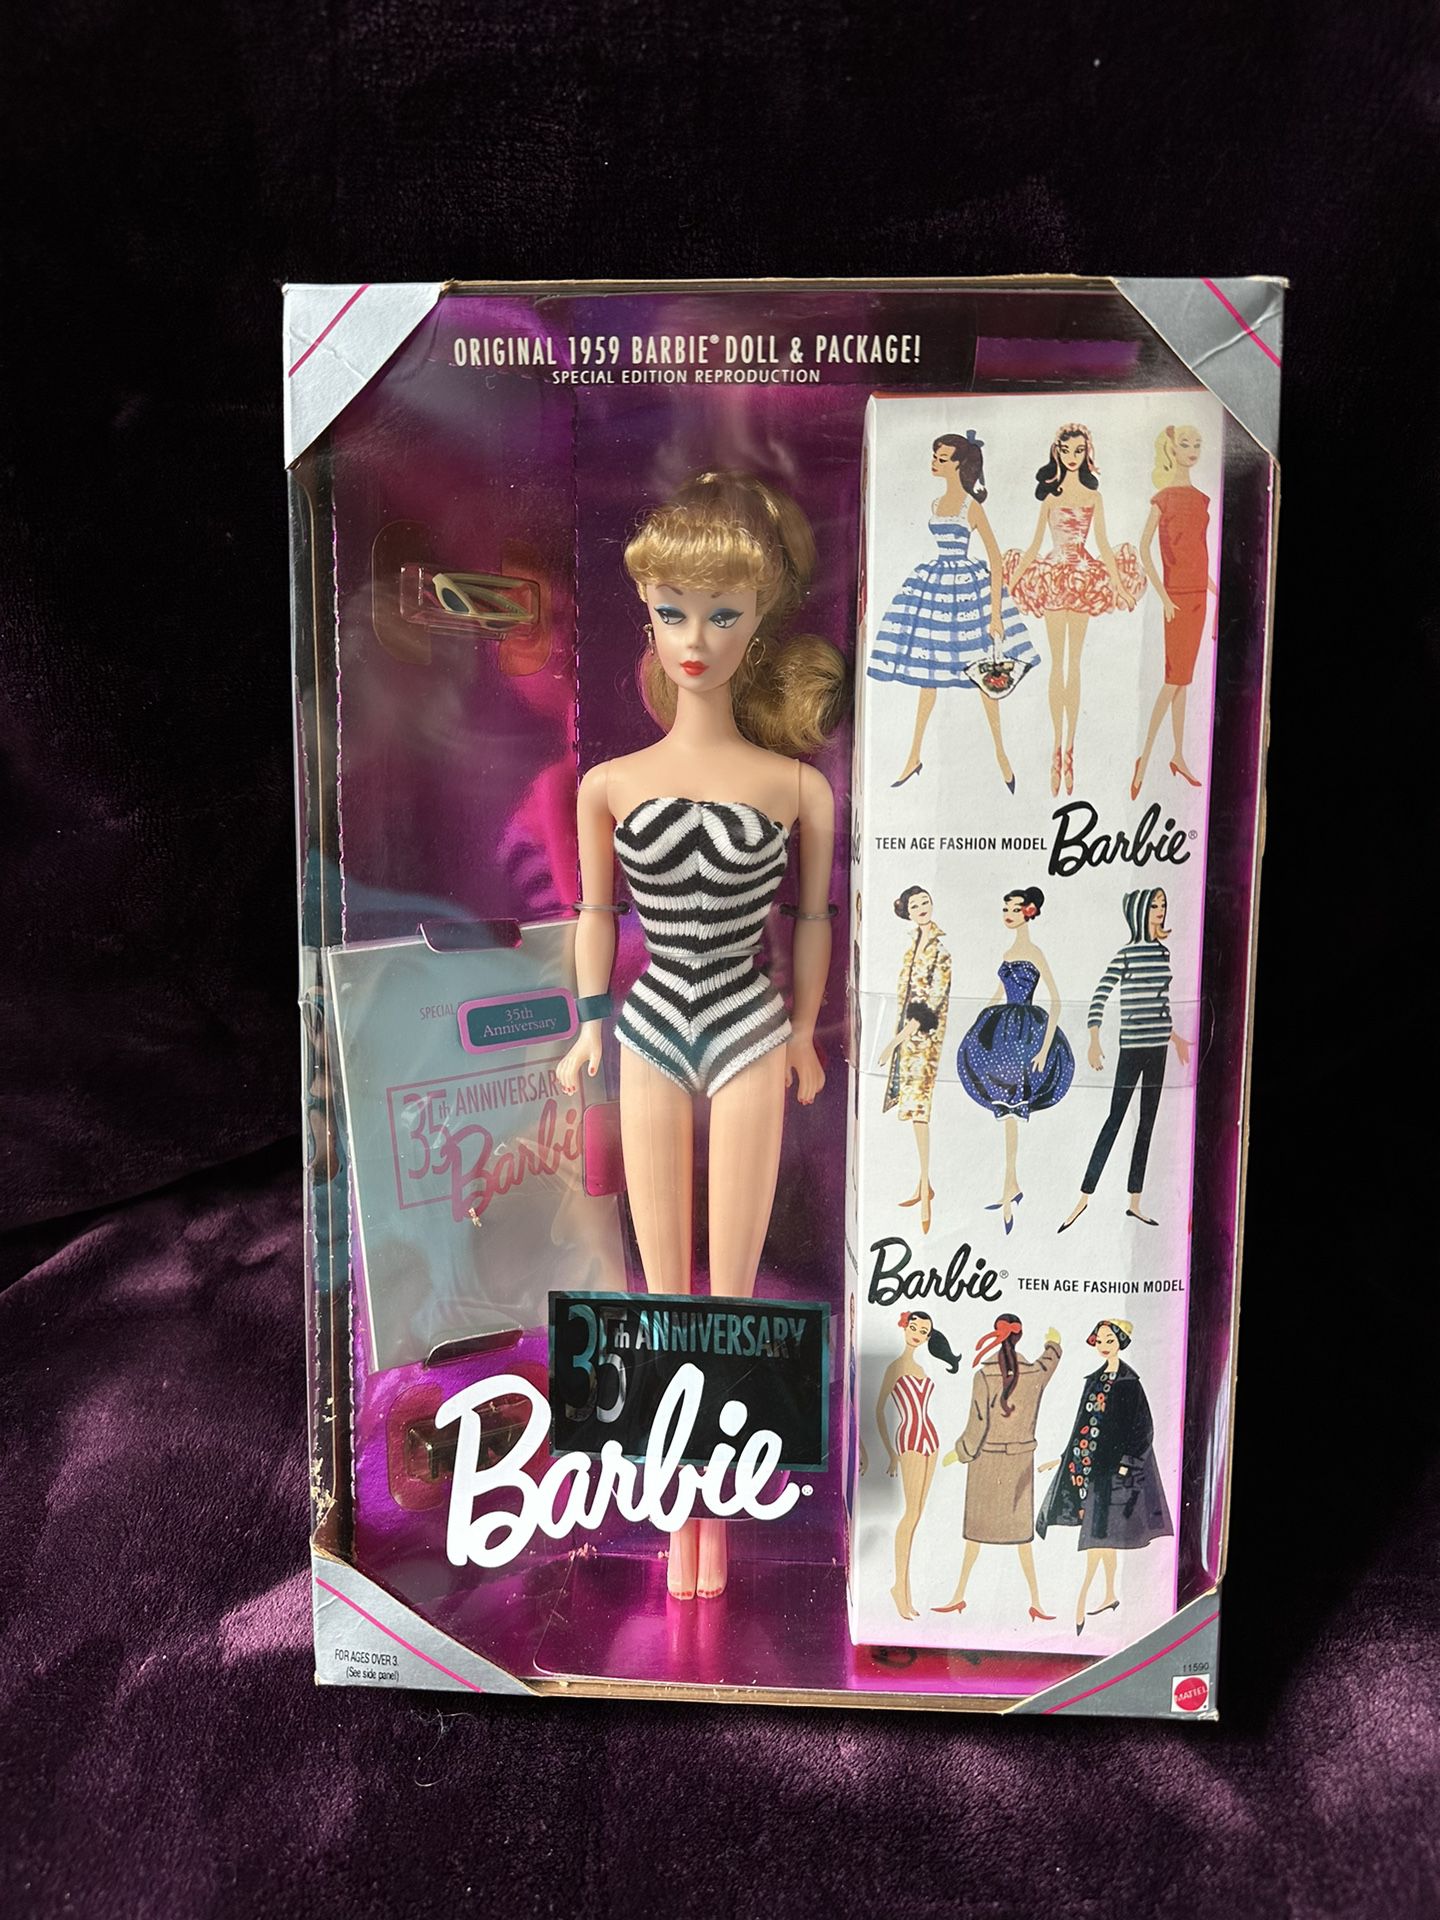 35th anniversary Barbie